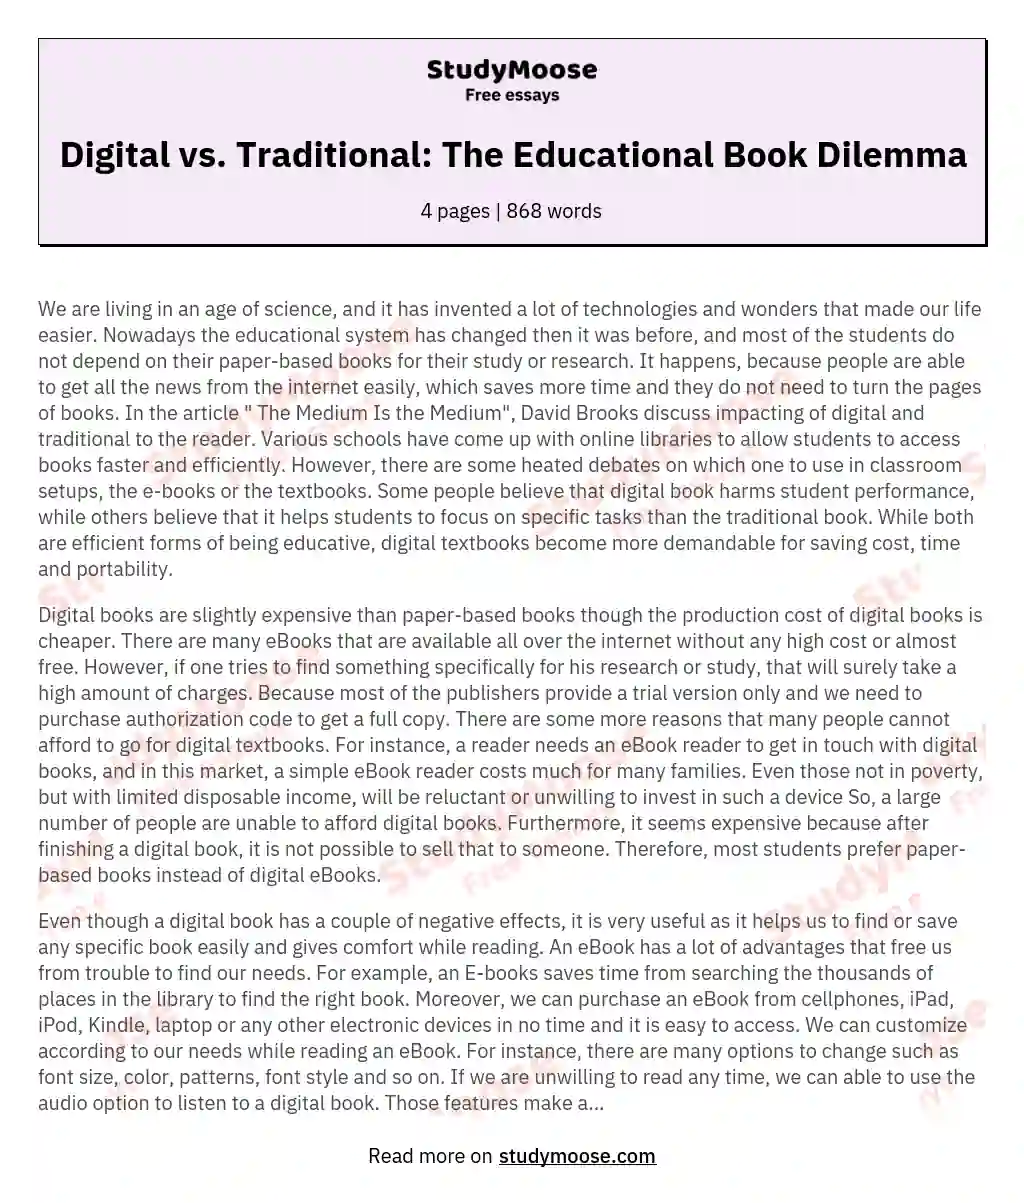 Digital vs. Traditional: The Educational Book Dilemma essay